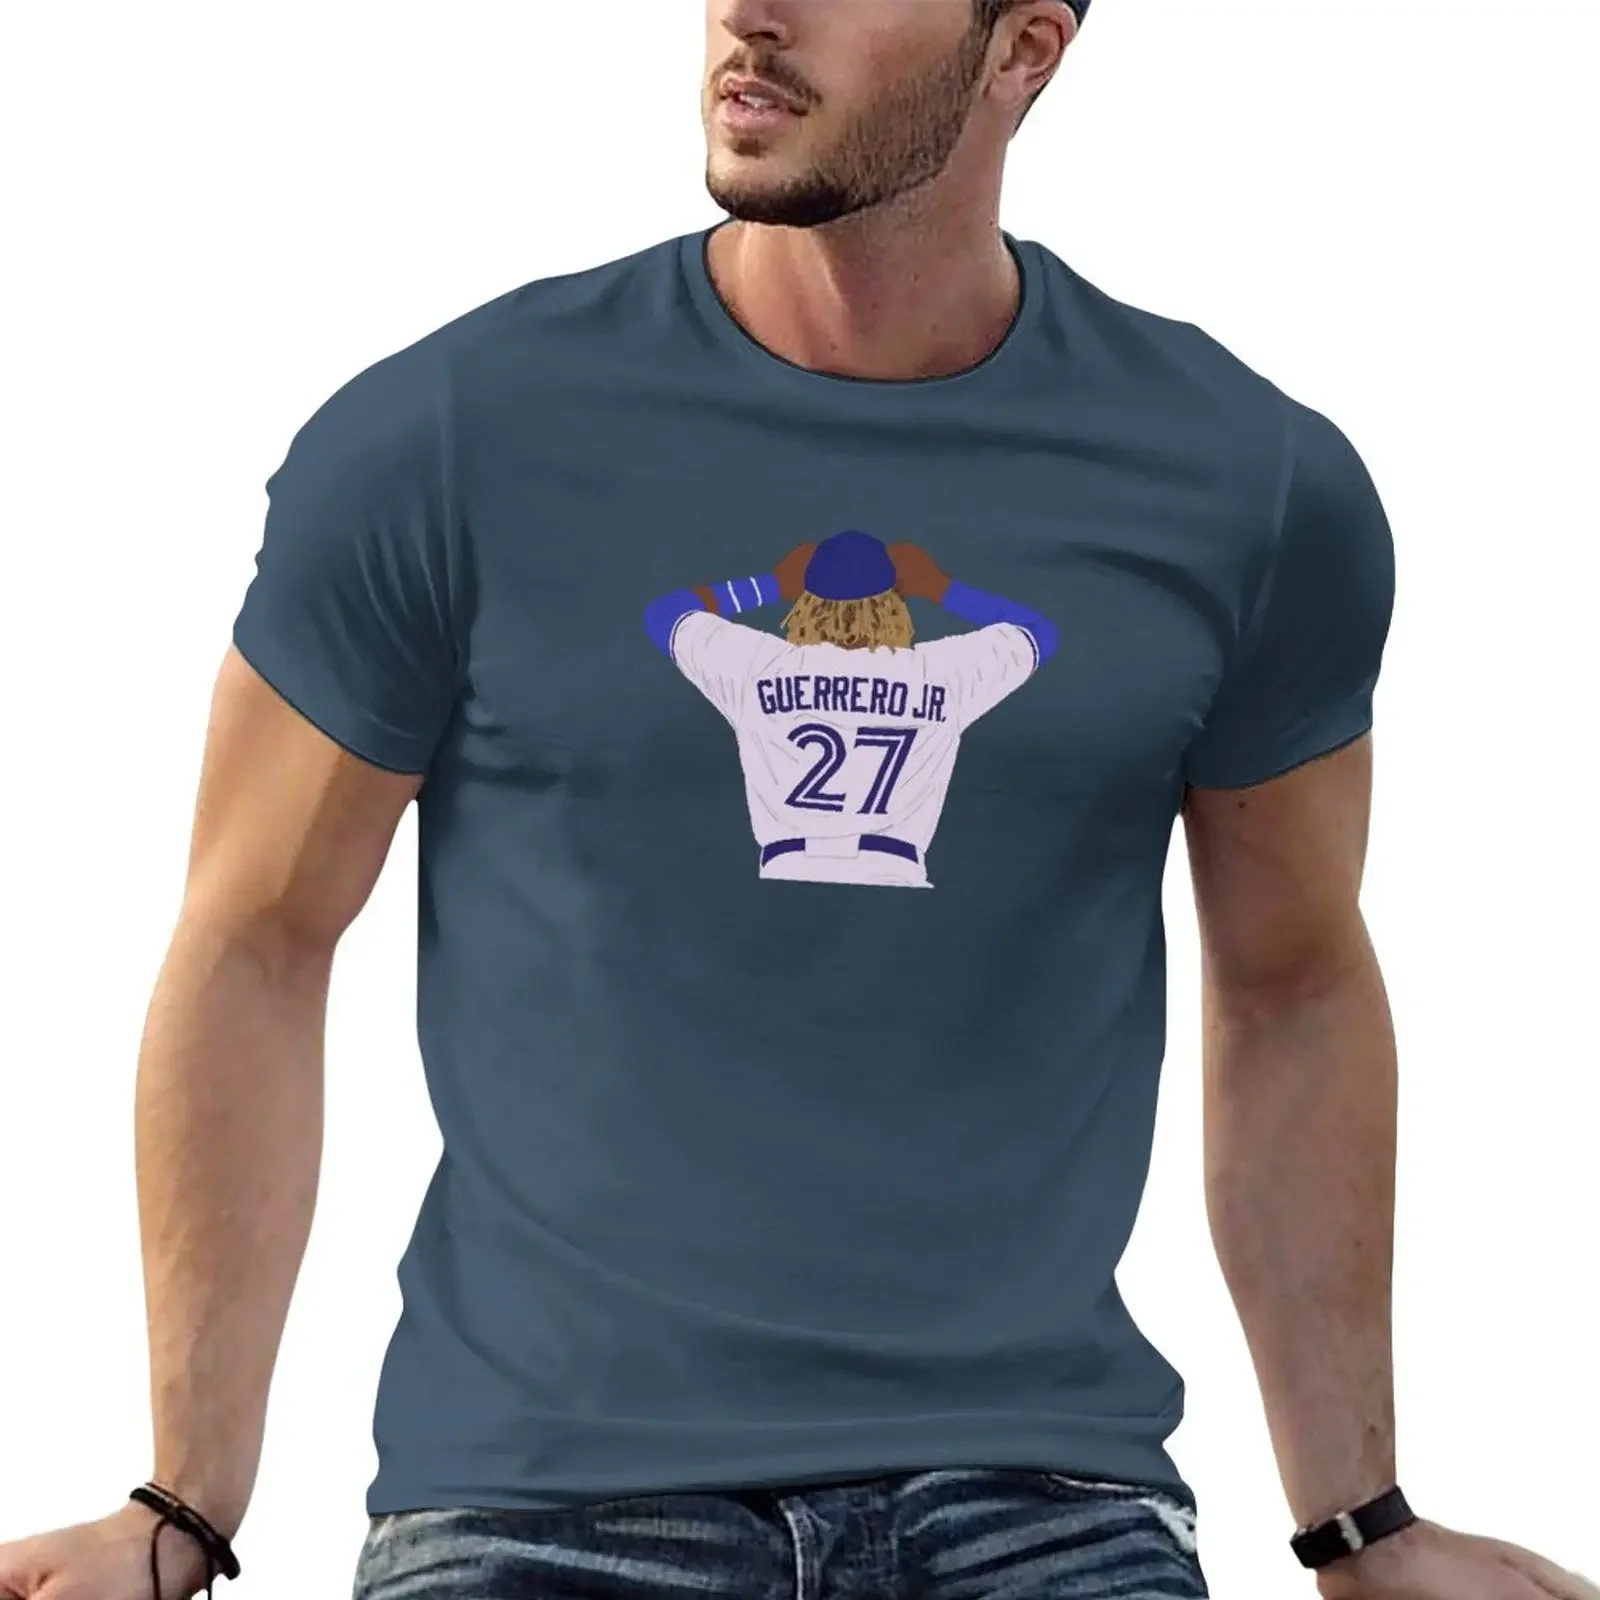 

Vladimir Guerrero Jr T-Shirt funnys oversizeds boys animal print shirt plus sizes fitted t shirts for men